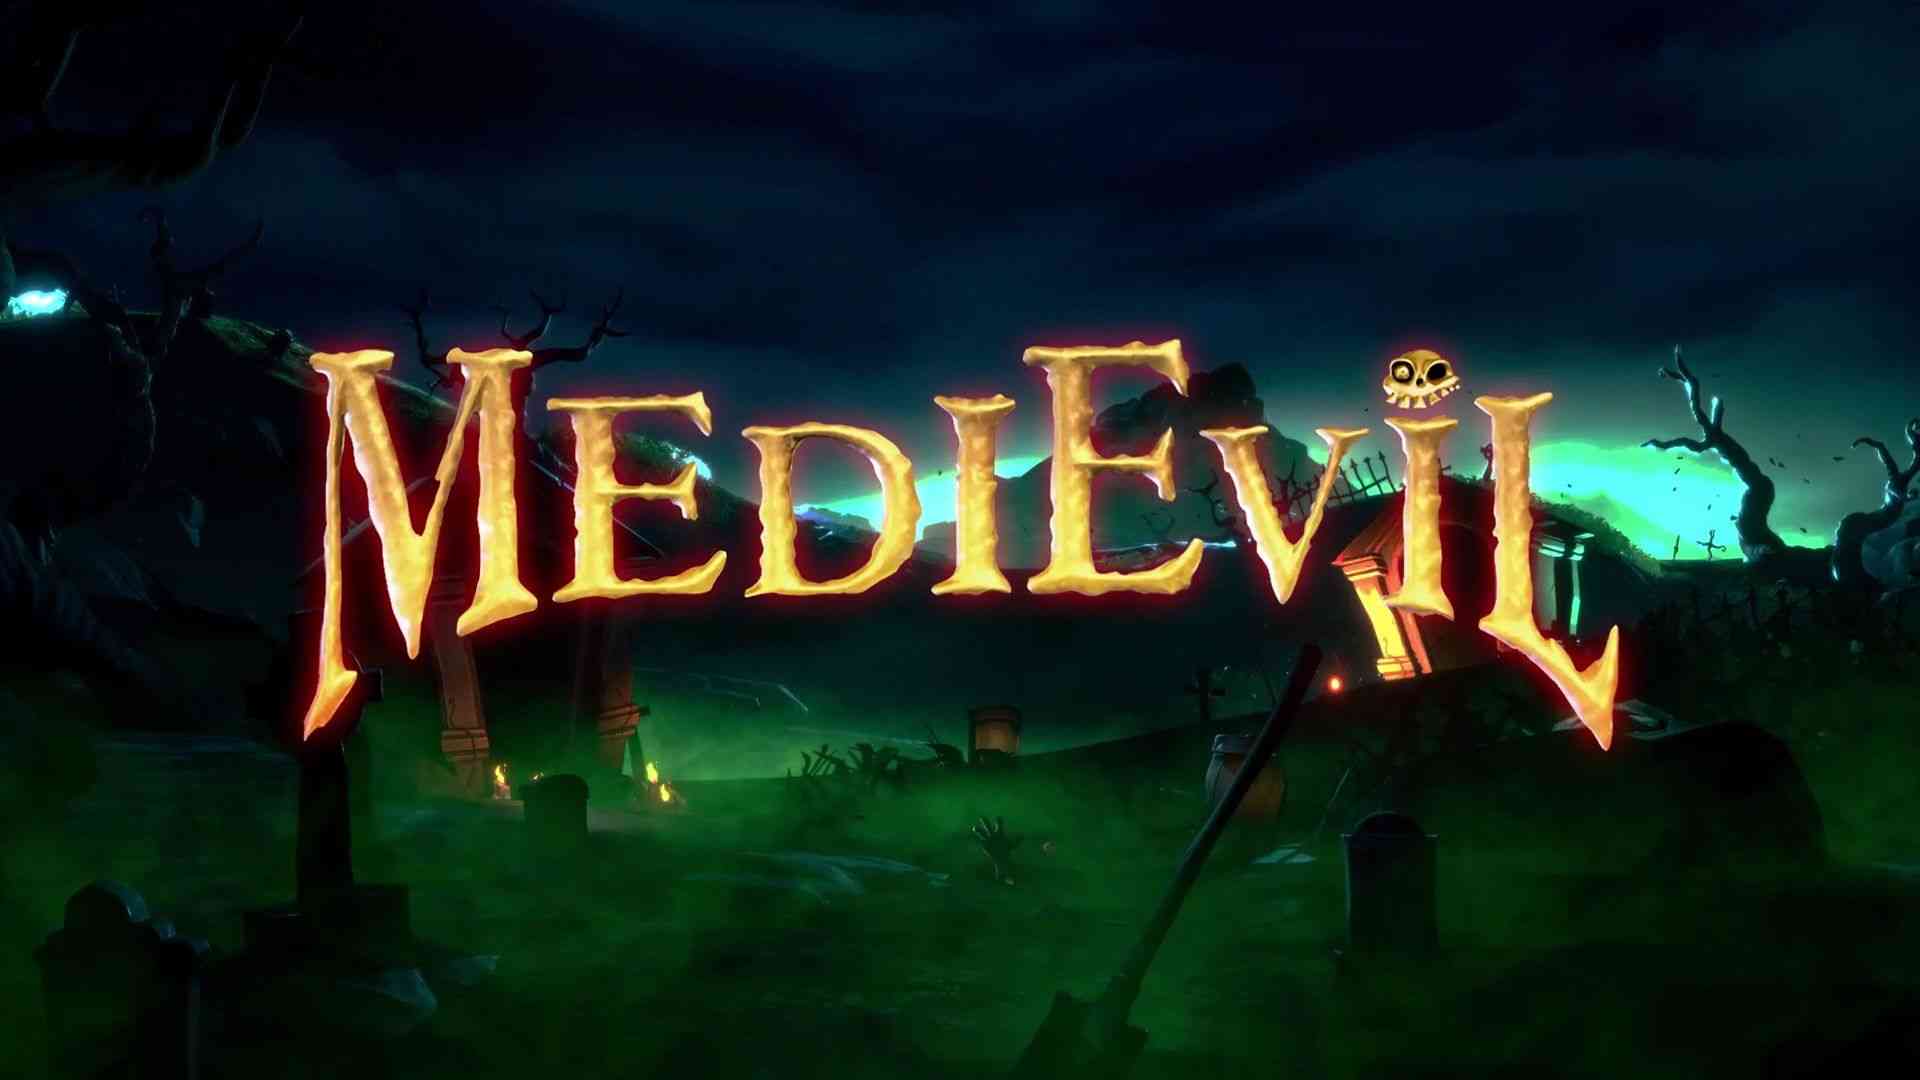 medievil remake behind the scenes video released 2946 big 1